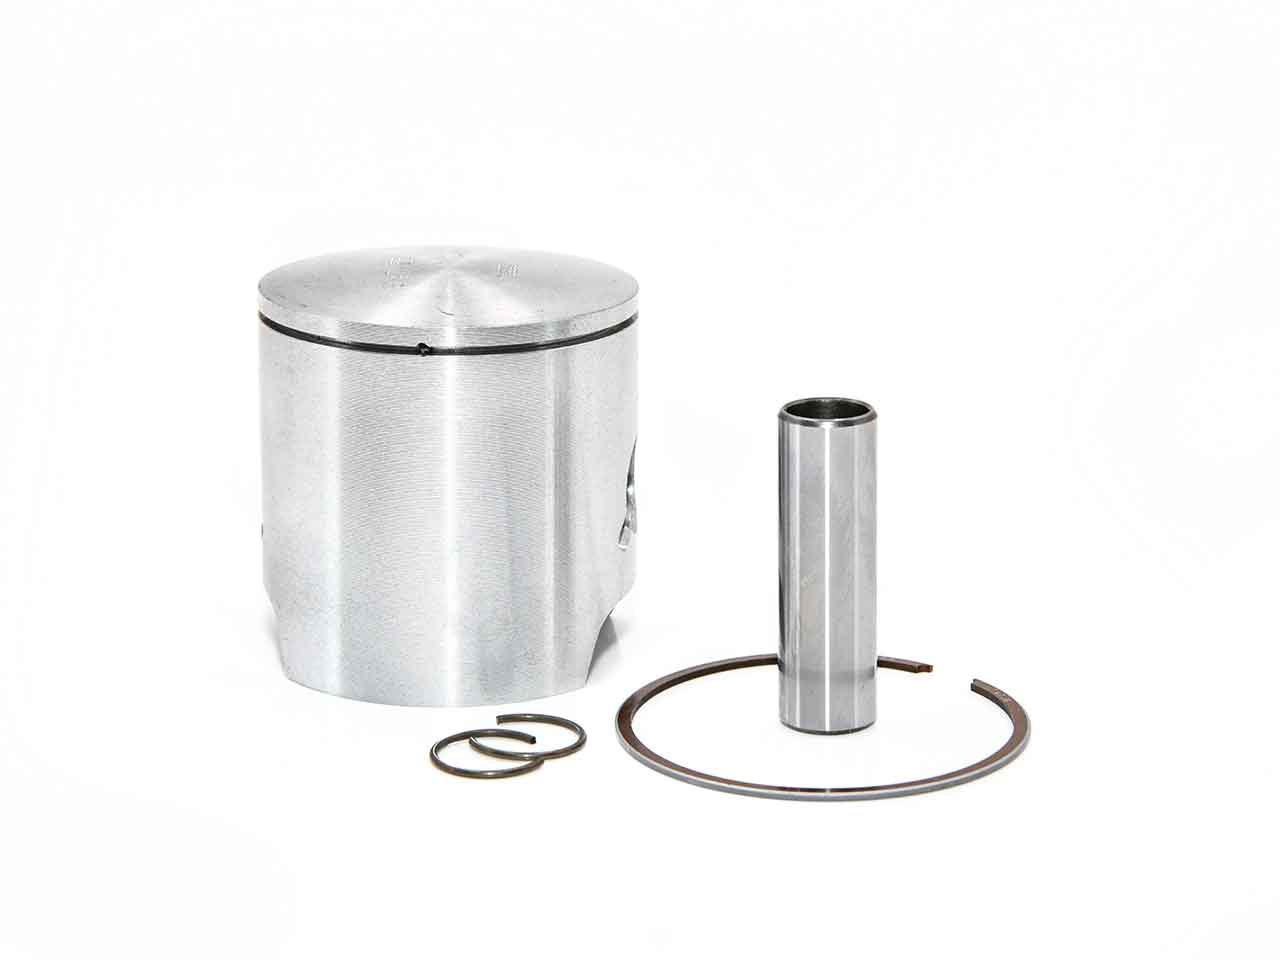 Piston BARIKIT, Zündapp 50cc aluminum cylinder L-ring